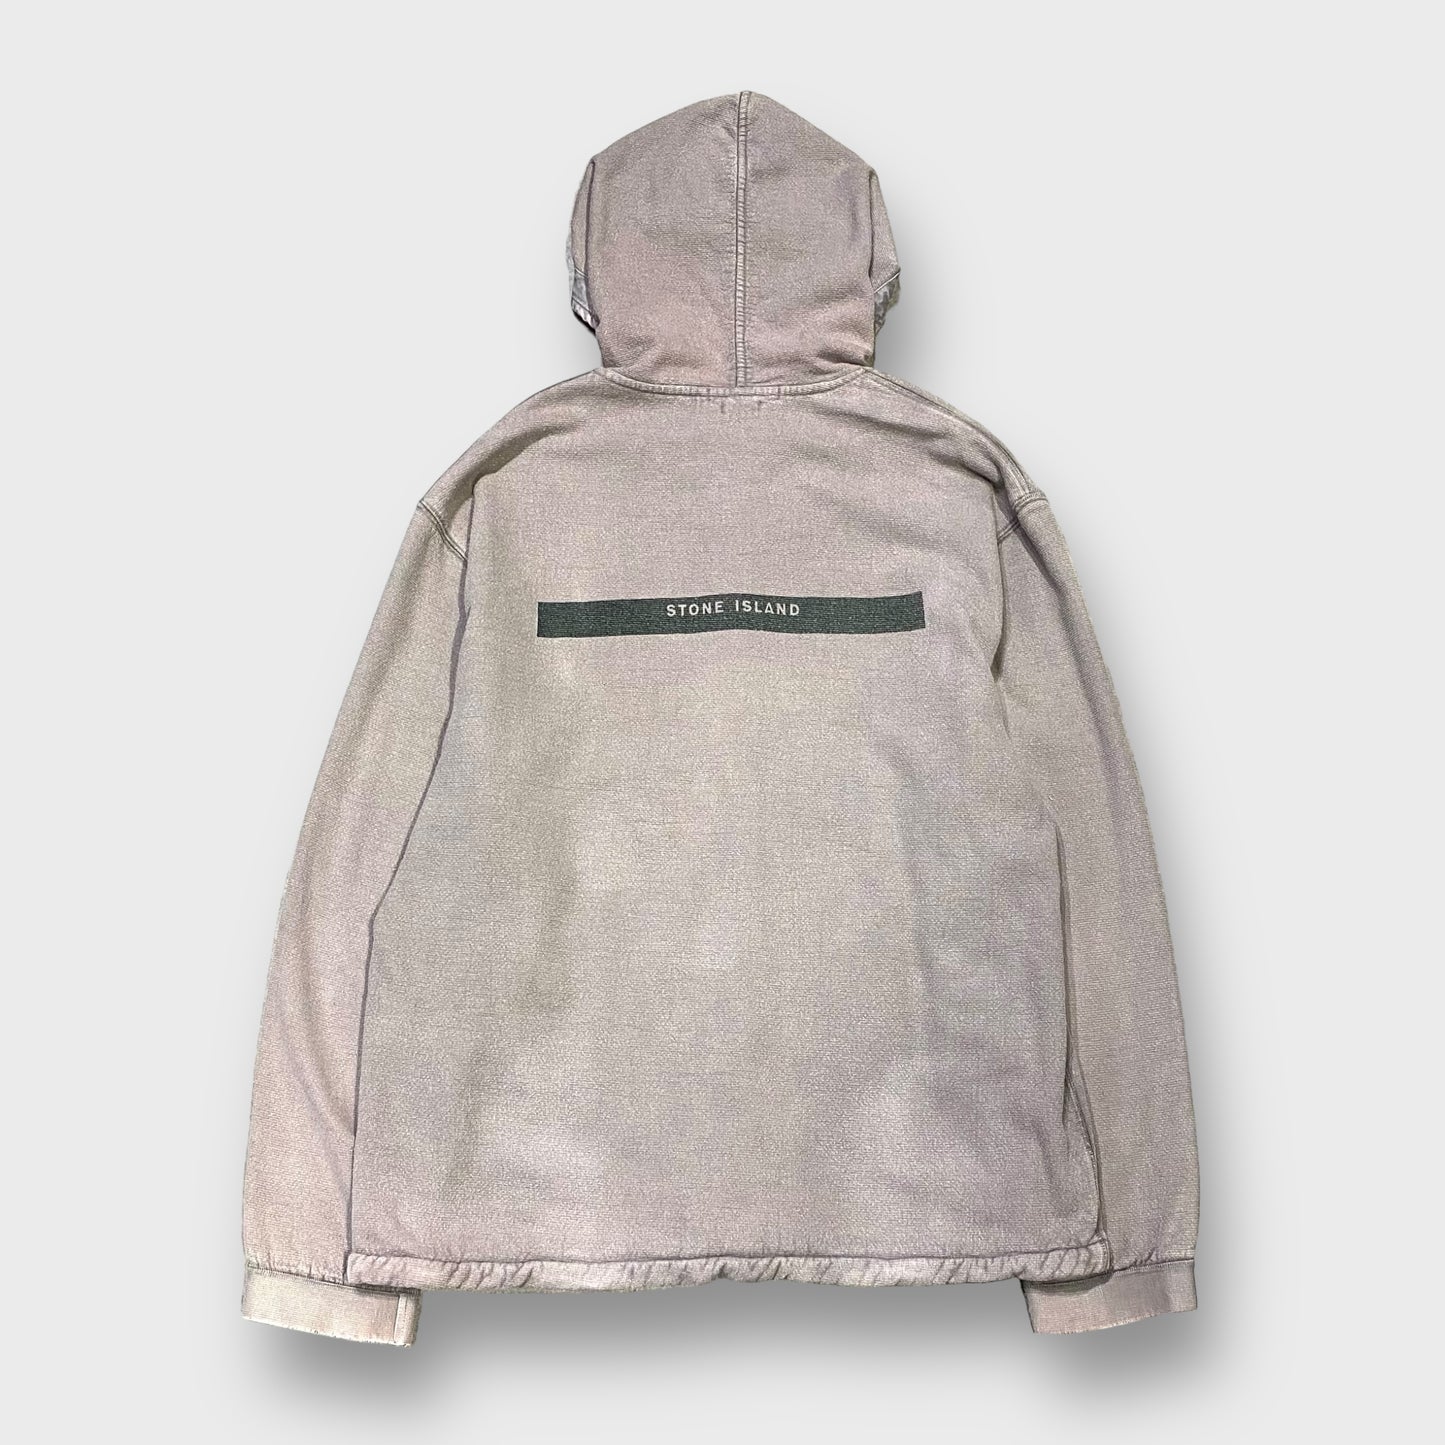 2000's S/S "STONE ISLAND" Hooded full open hoodie